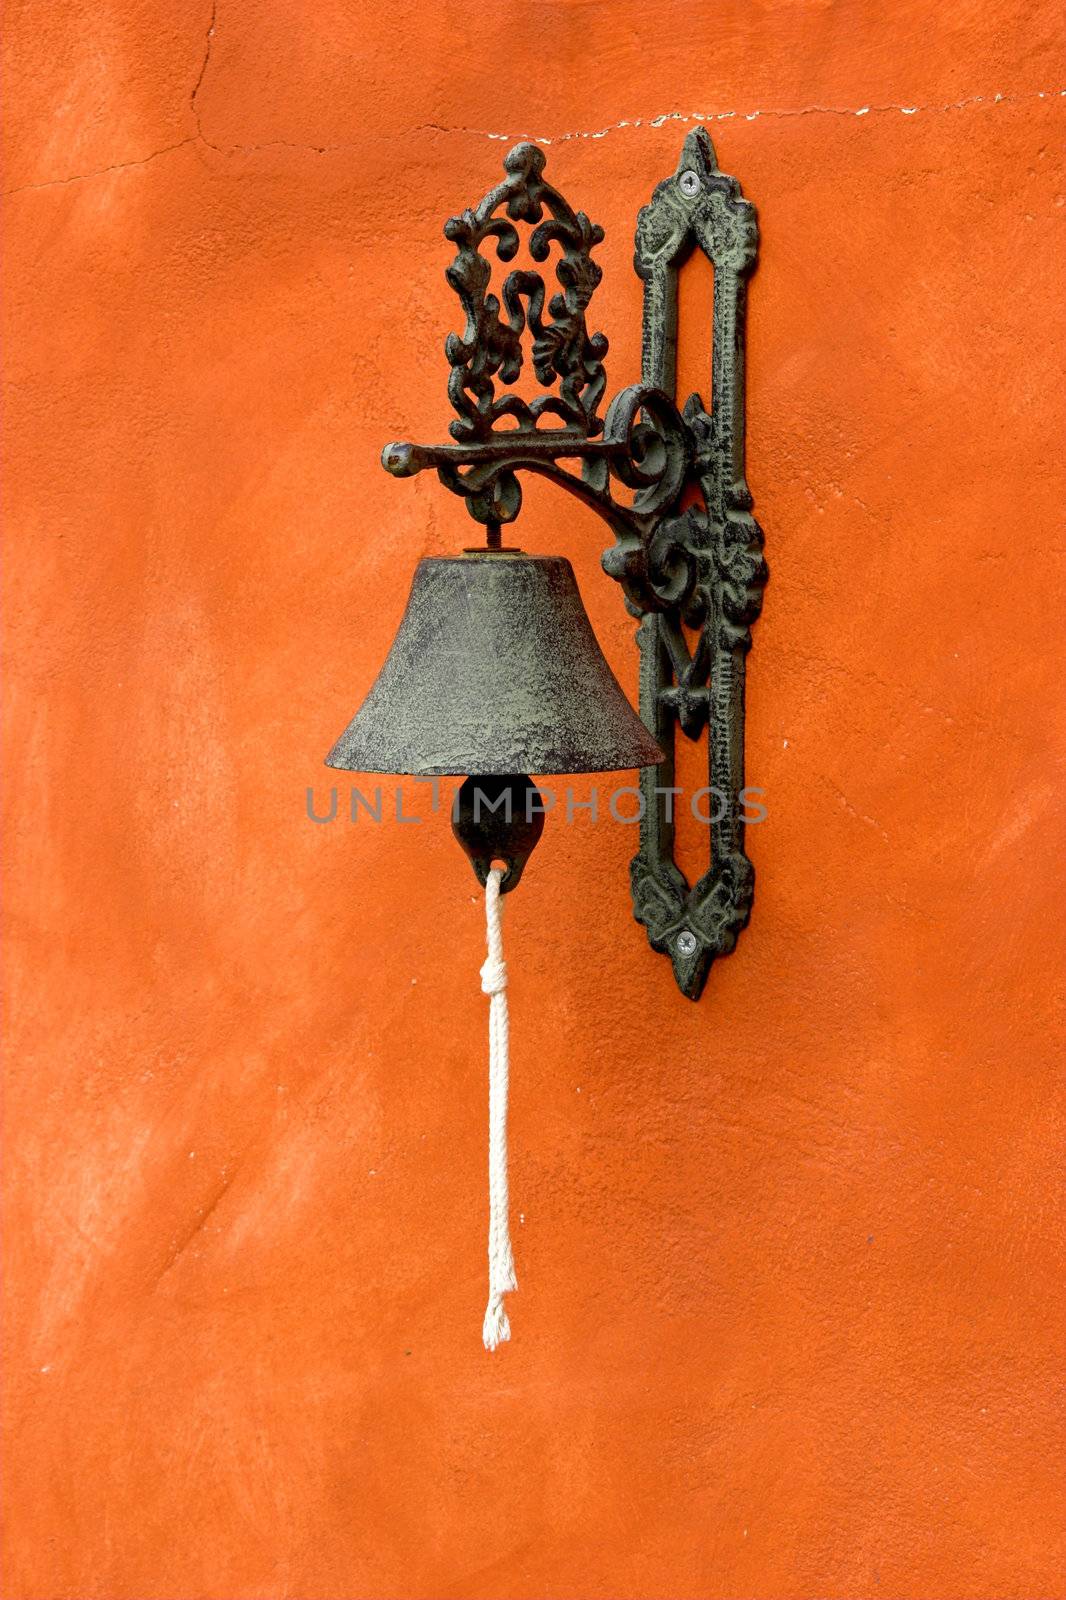 Old vintage bell on a orange wall